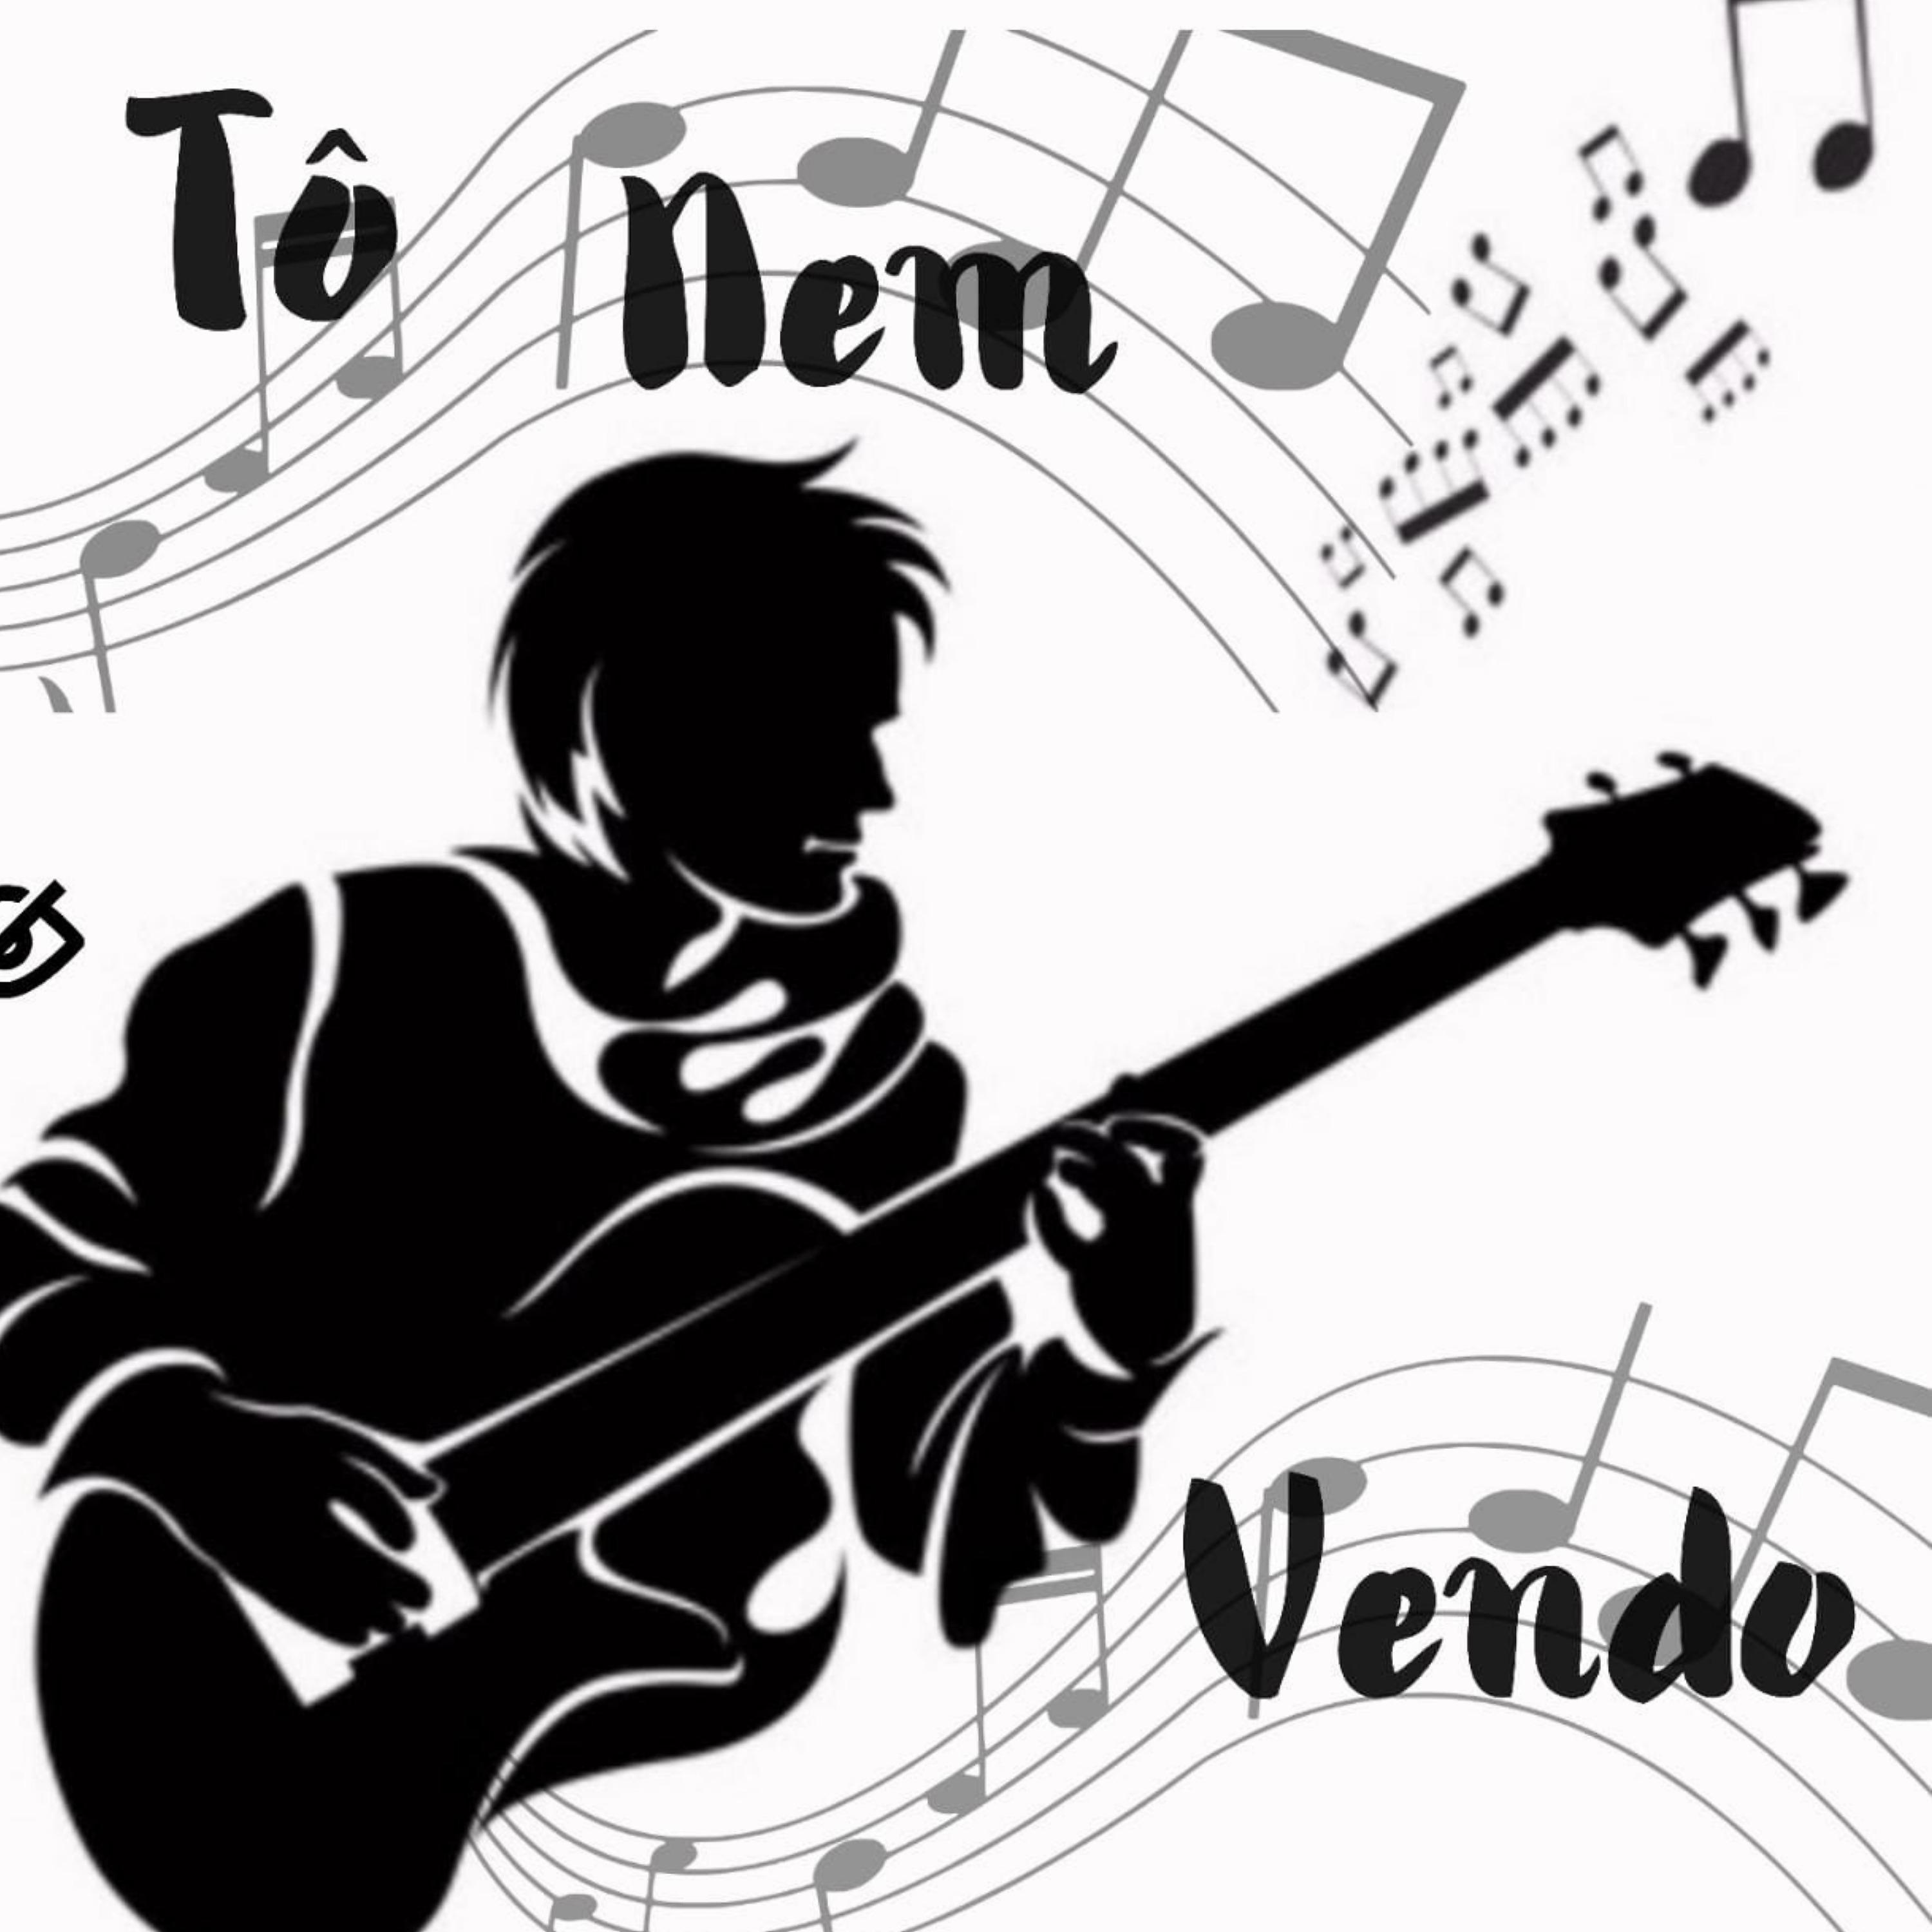 Постер альбома Tô Nem Vendo